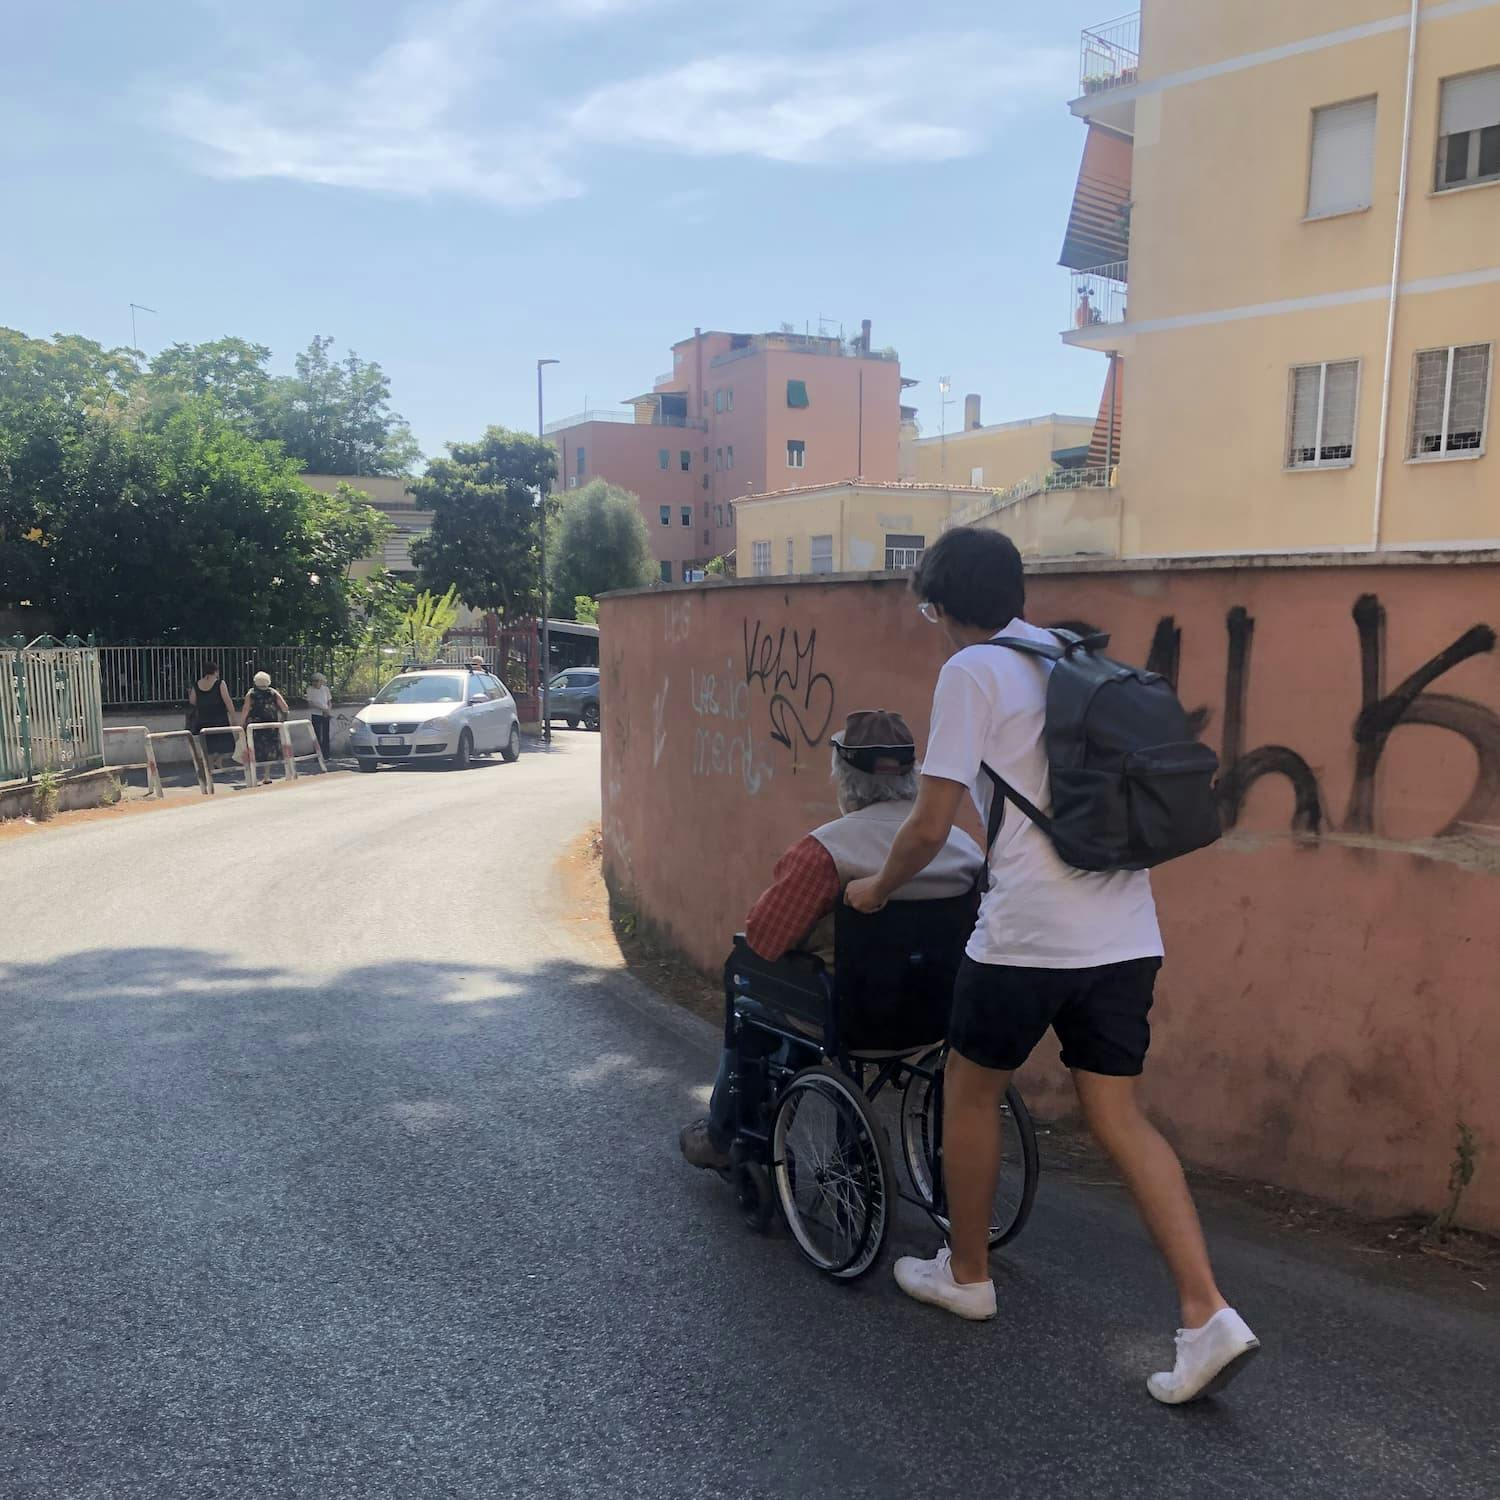 Luca helping an older gentleman in a wheelchair get to his destination